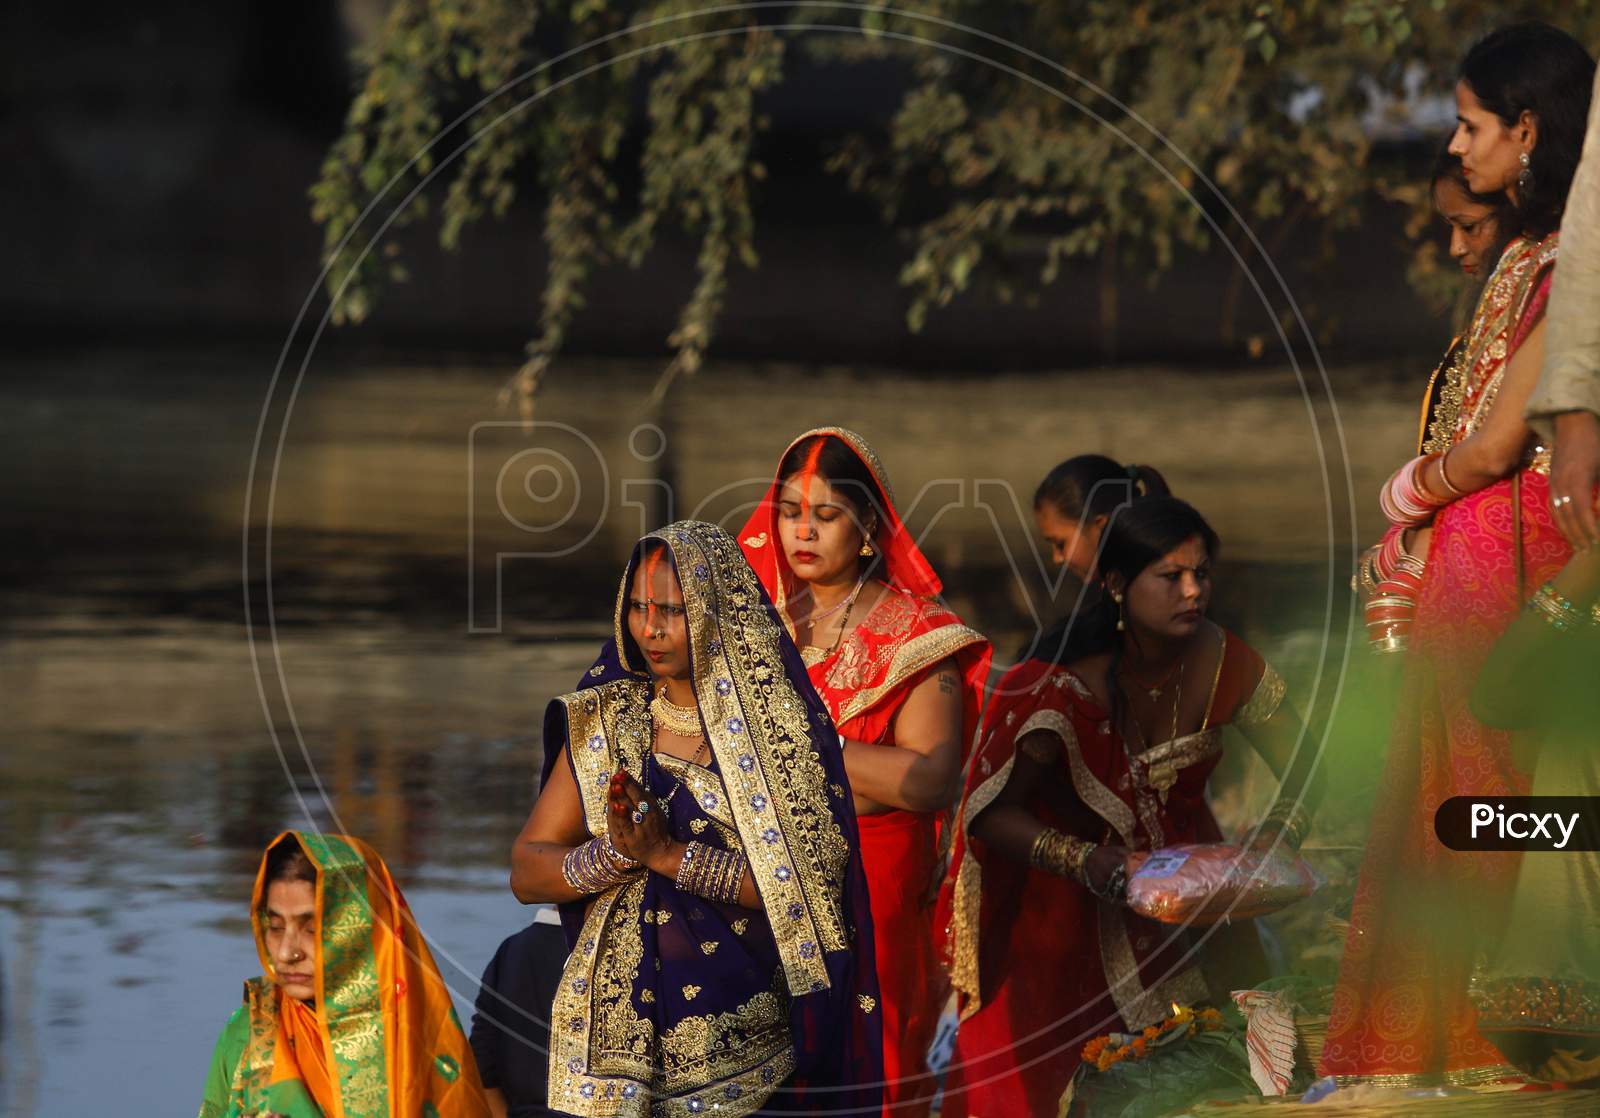 Hindu devotees perform rituals during the Chhath festival in New Delhi- Ghaziabad border on November 20, 2020.